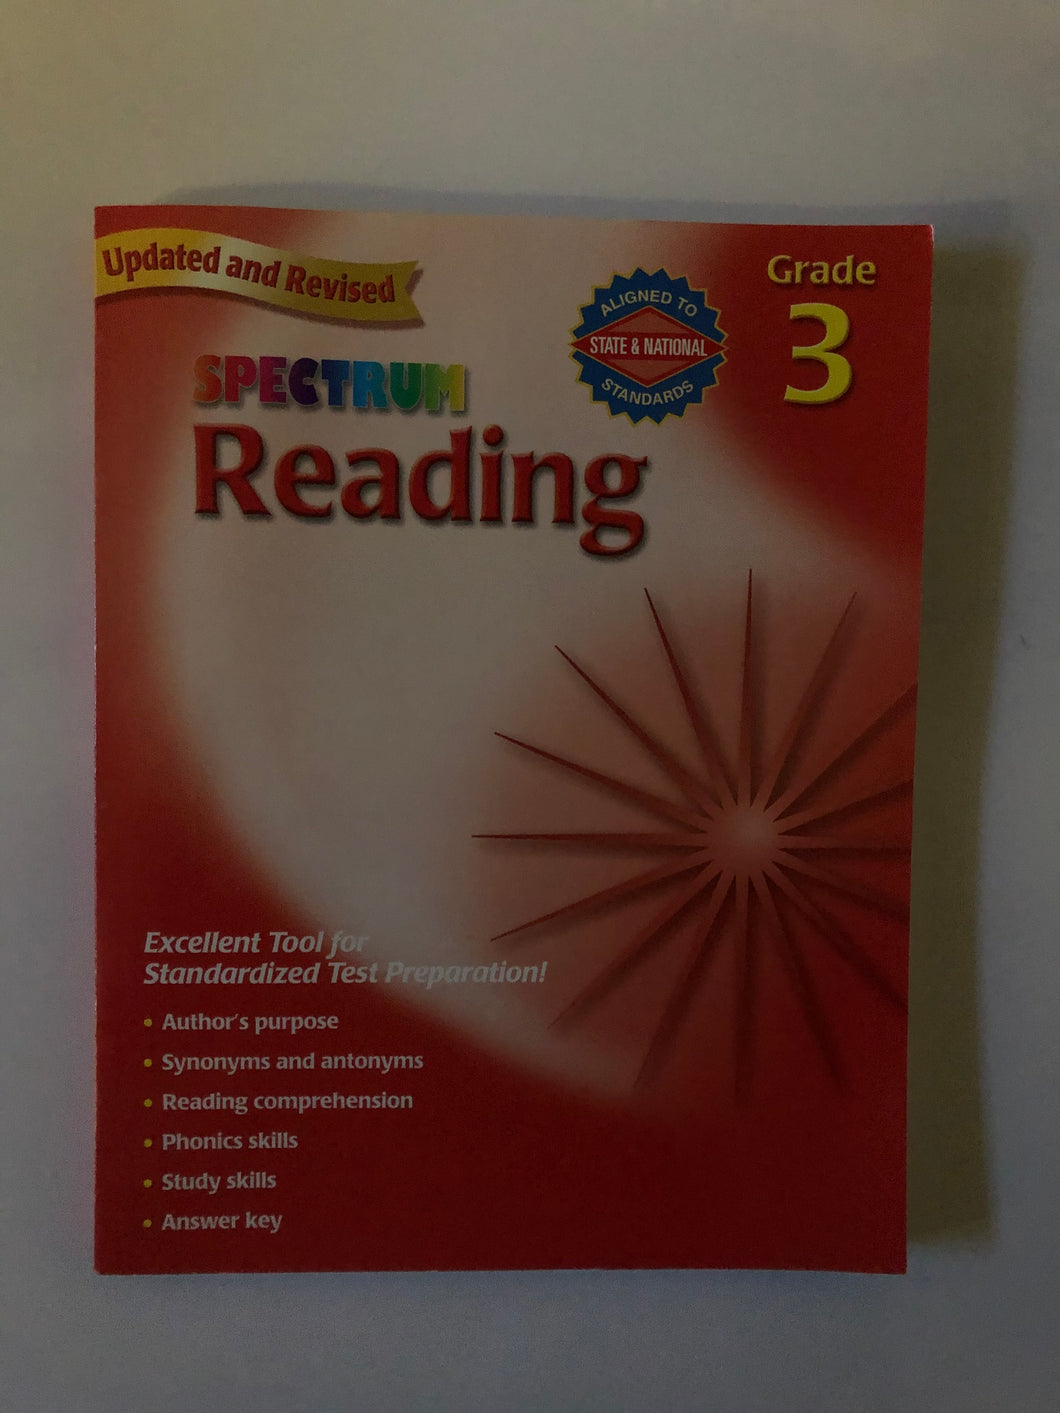 Spectrum, reading - Grade 3